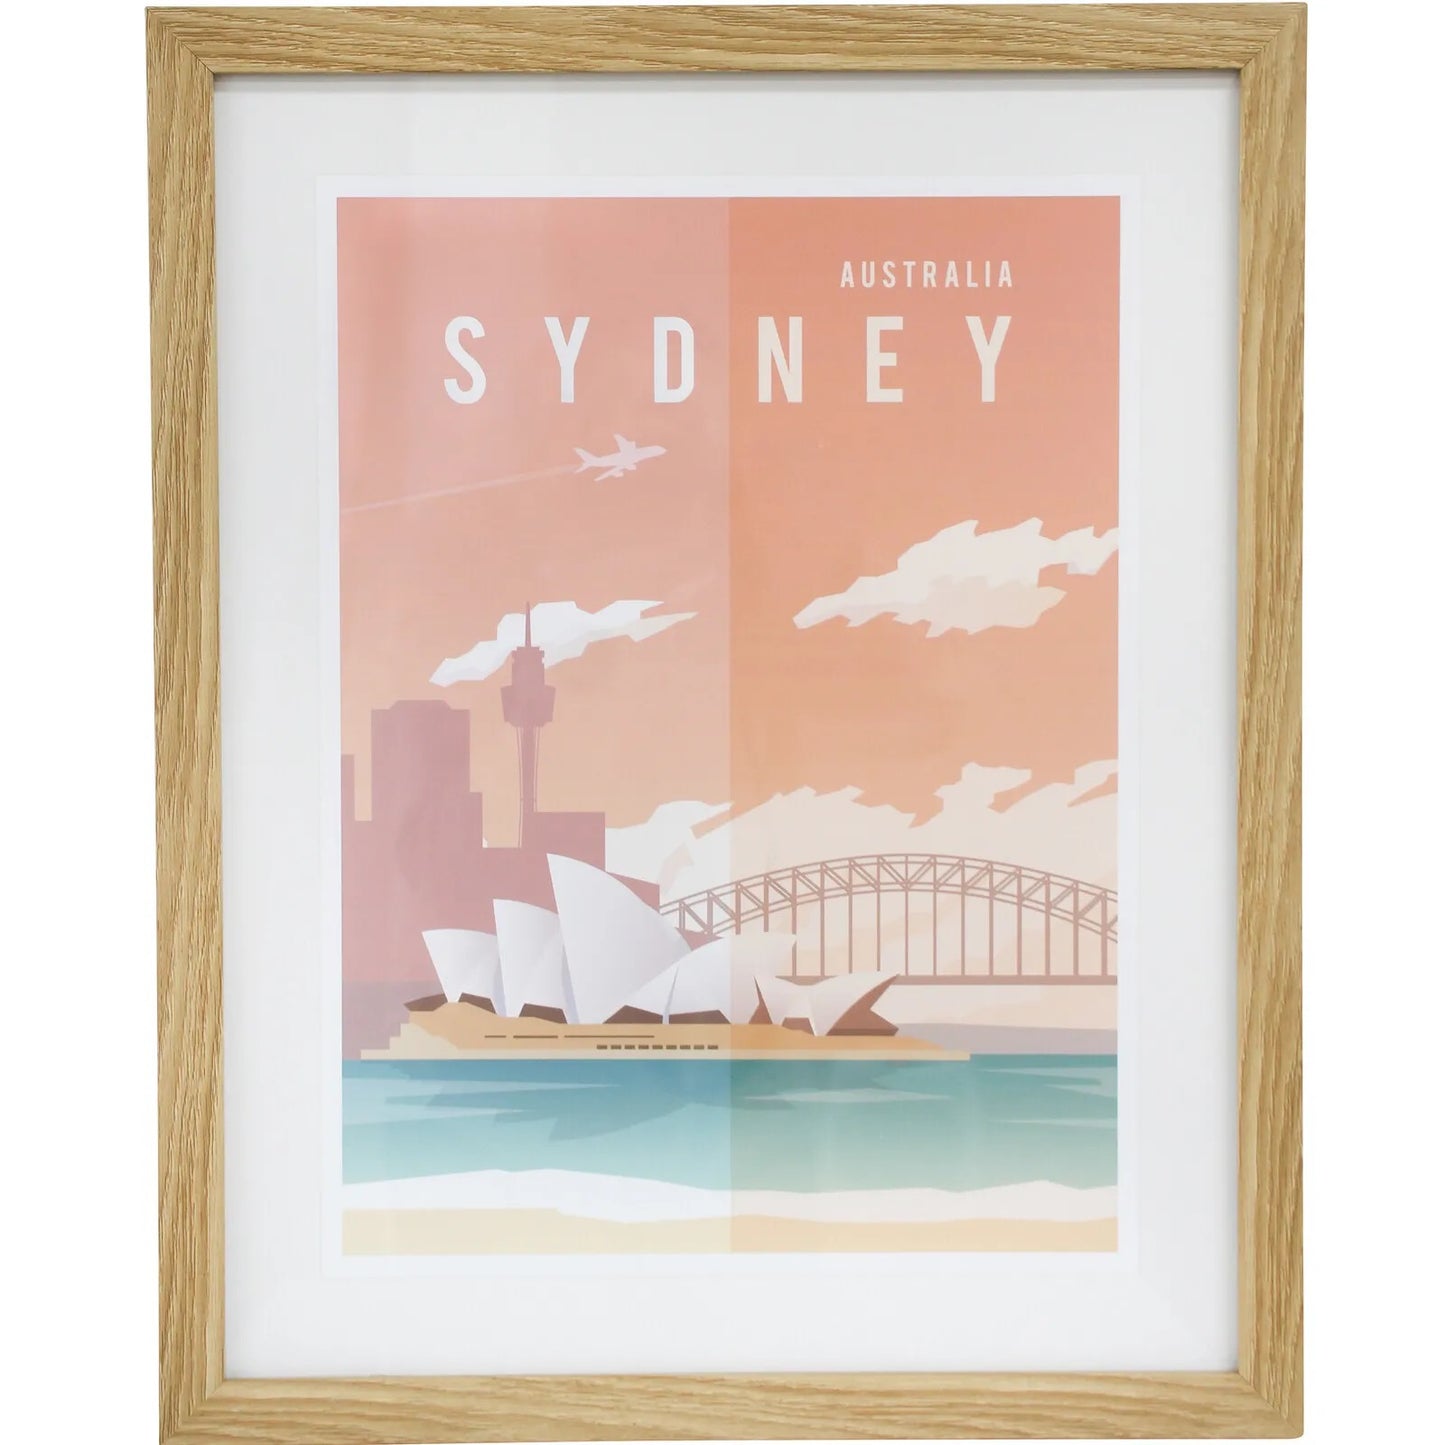 Sydney framed print